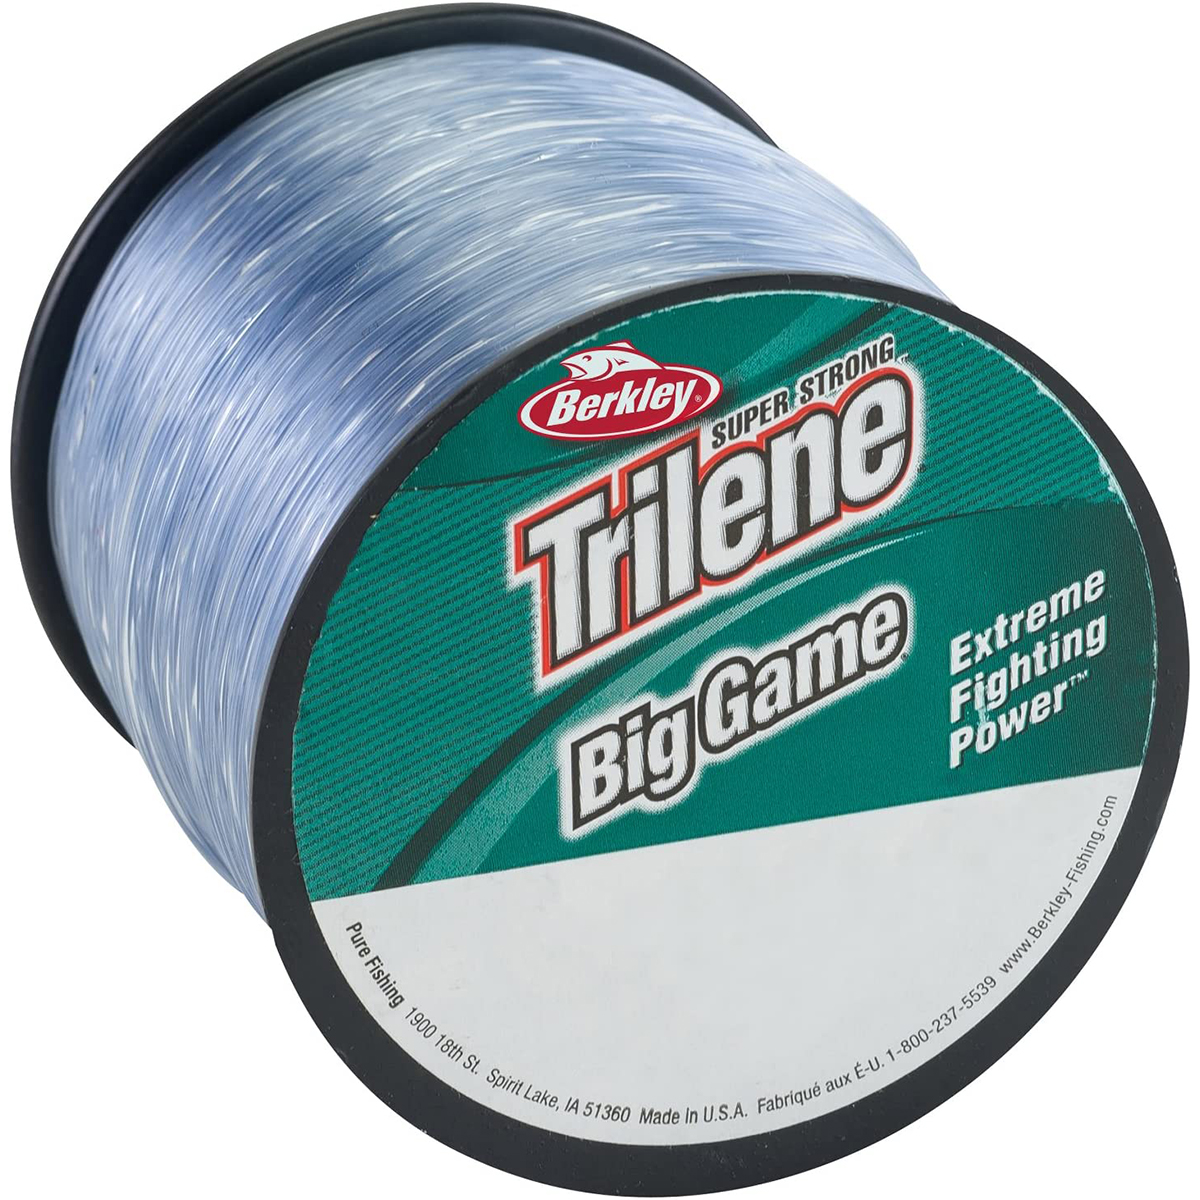 Berkley Trilene Big Game, Steel Blue, 12lb 5.4kg Fishing Line - image 1 of 5